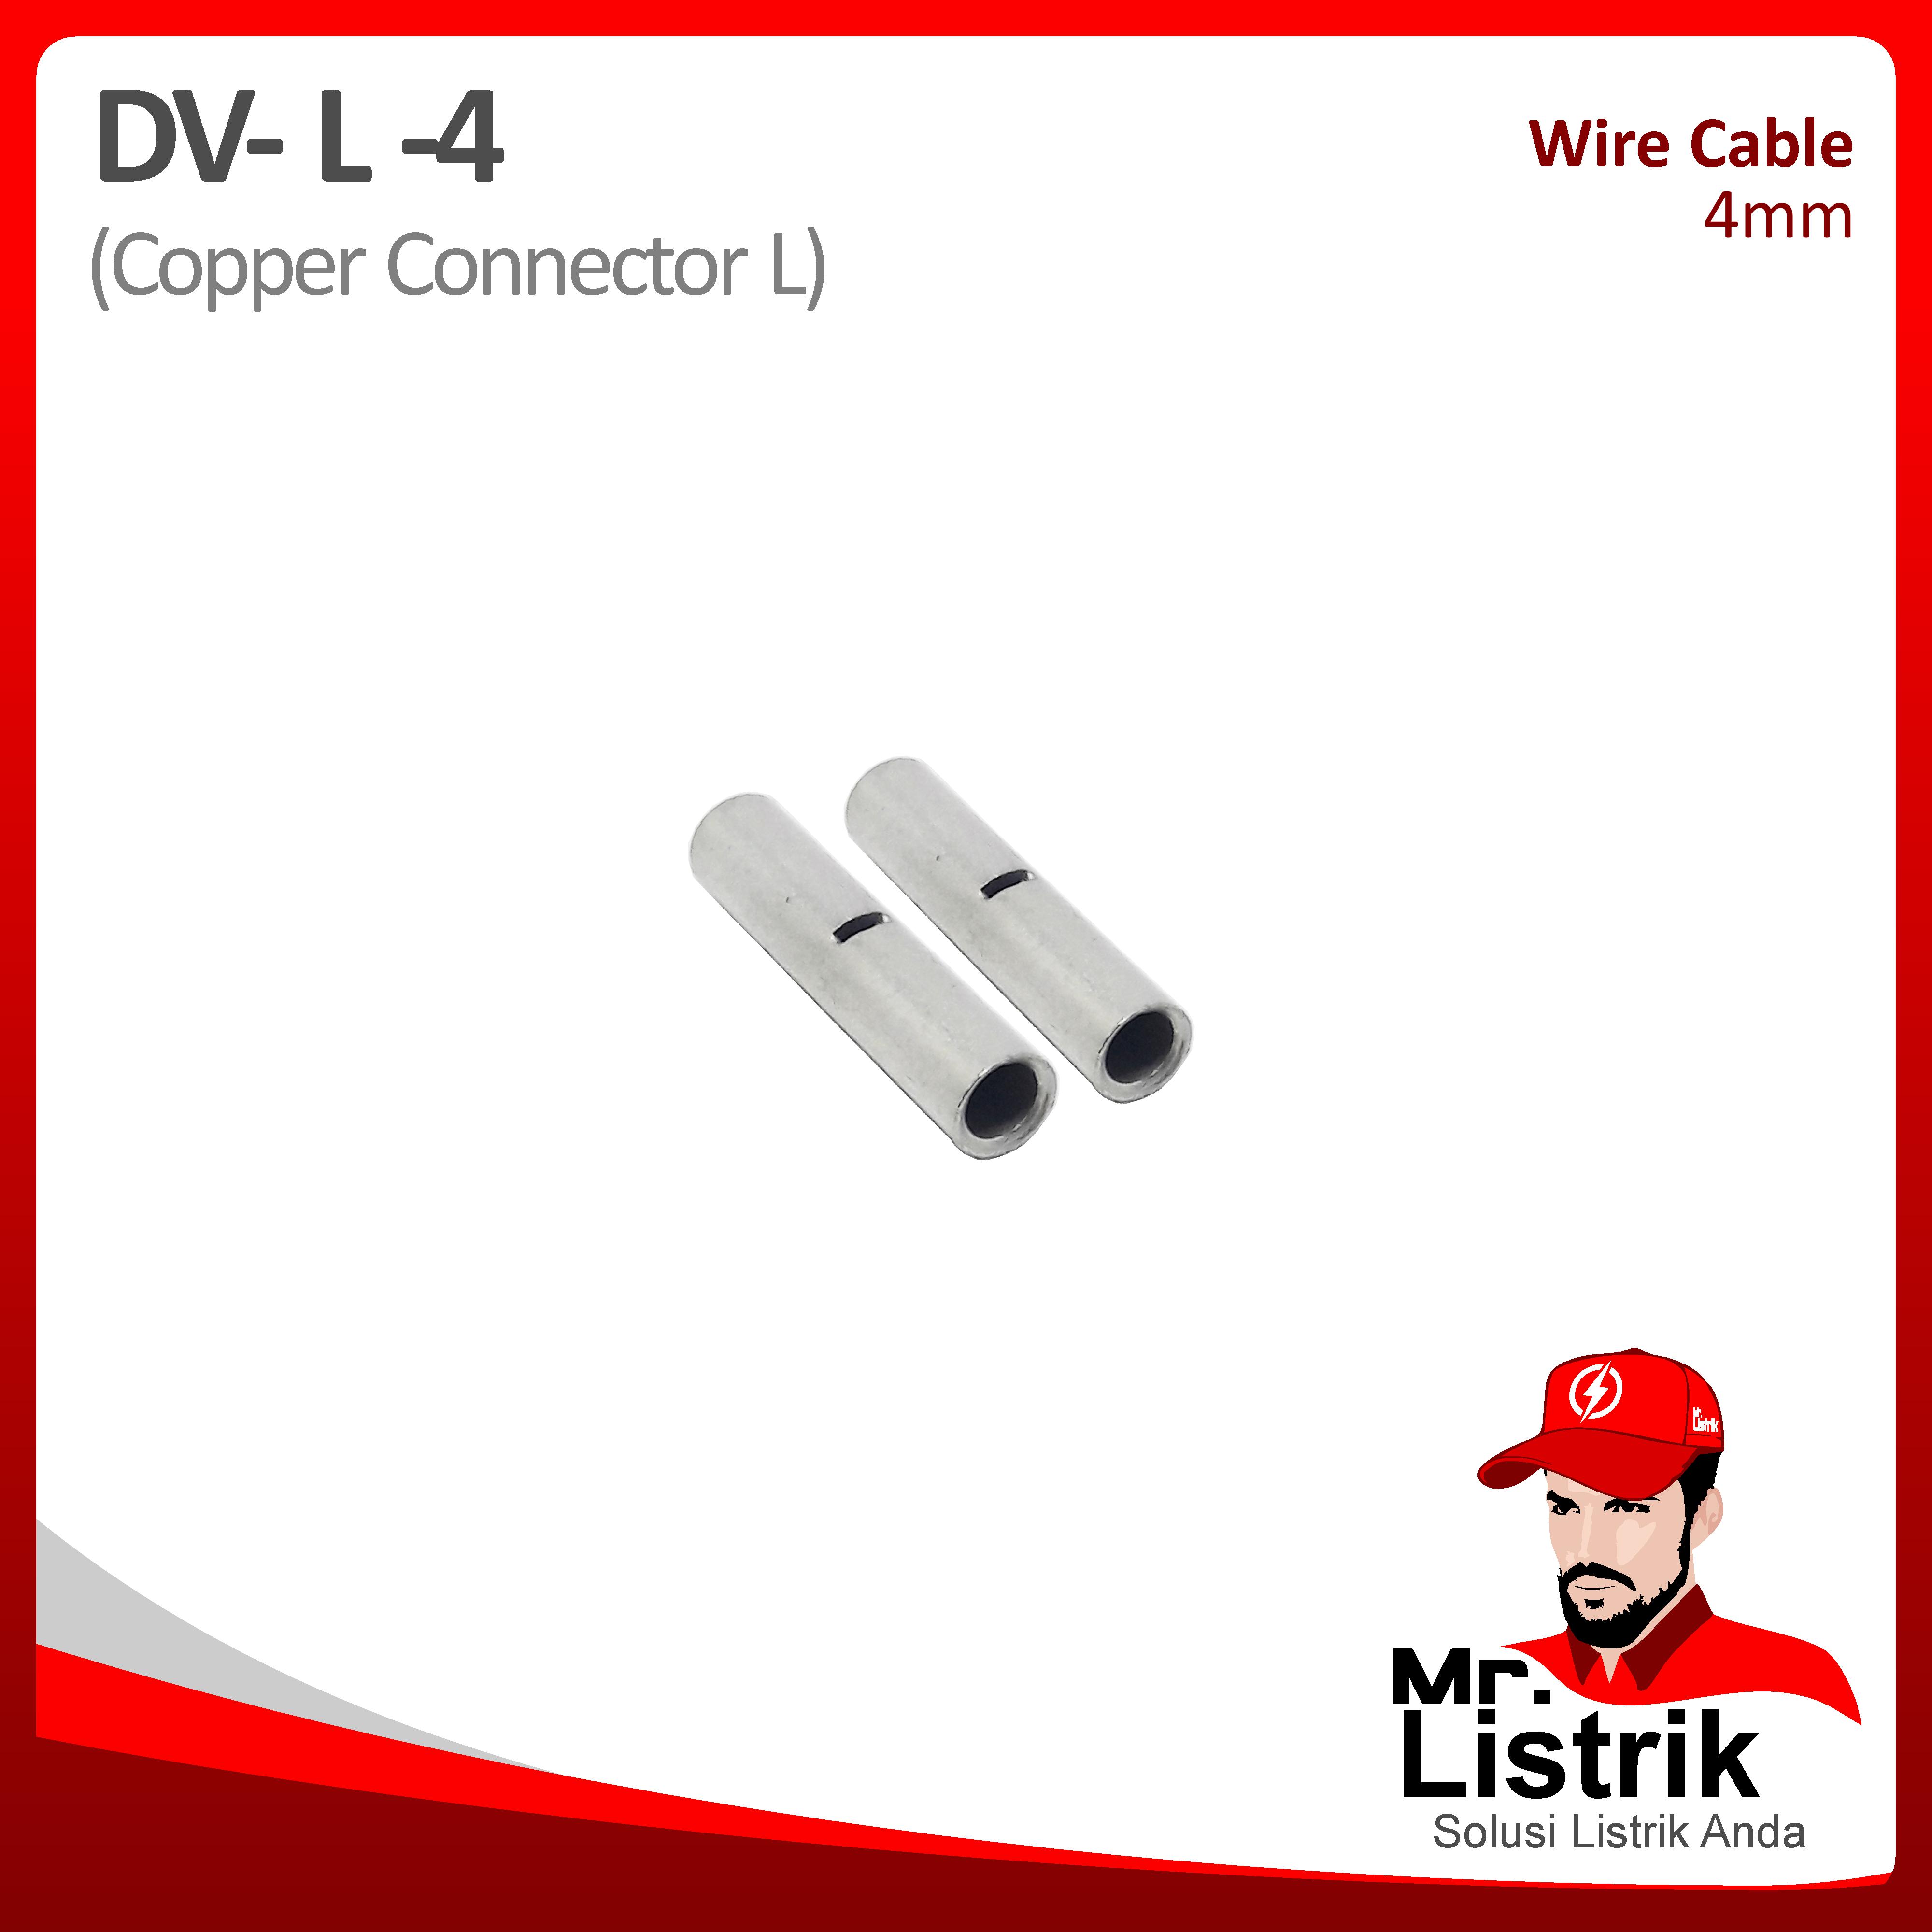 Copper Connector-L 4mm DV L-4